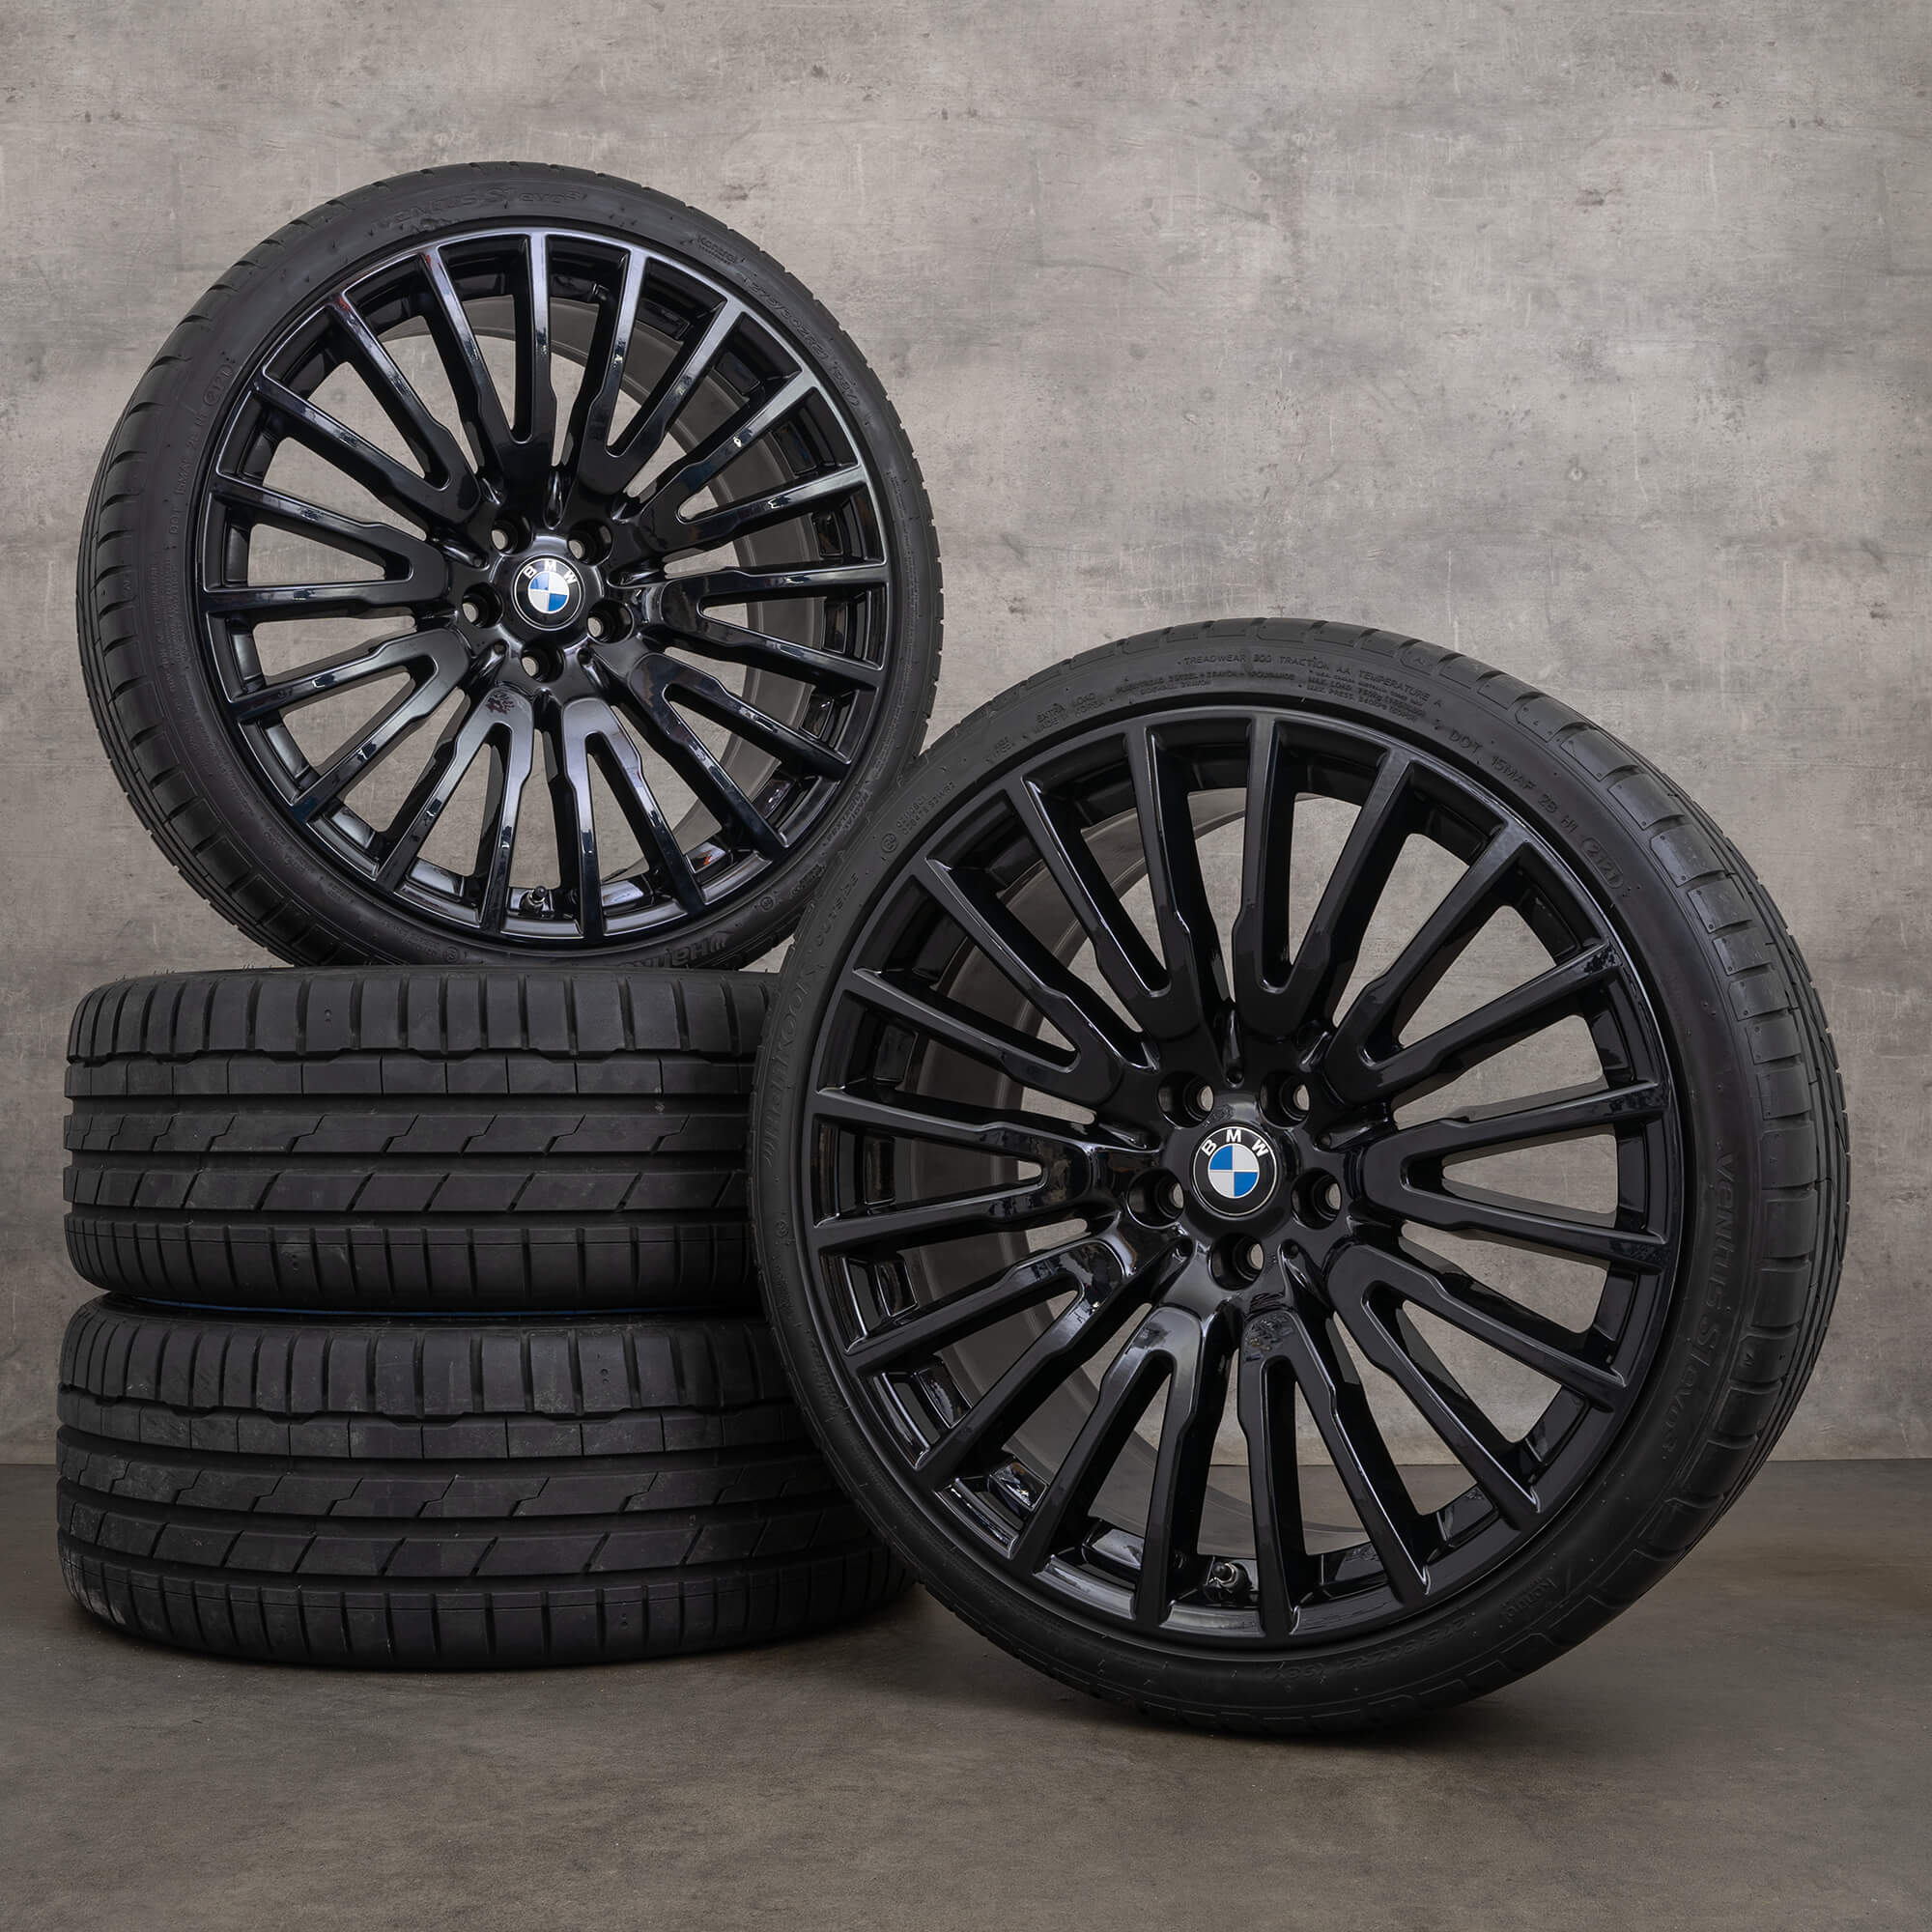 BMW 6 Series GT G32 7 G11 G12 summer wheels 21 inch rims tires styling 629